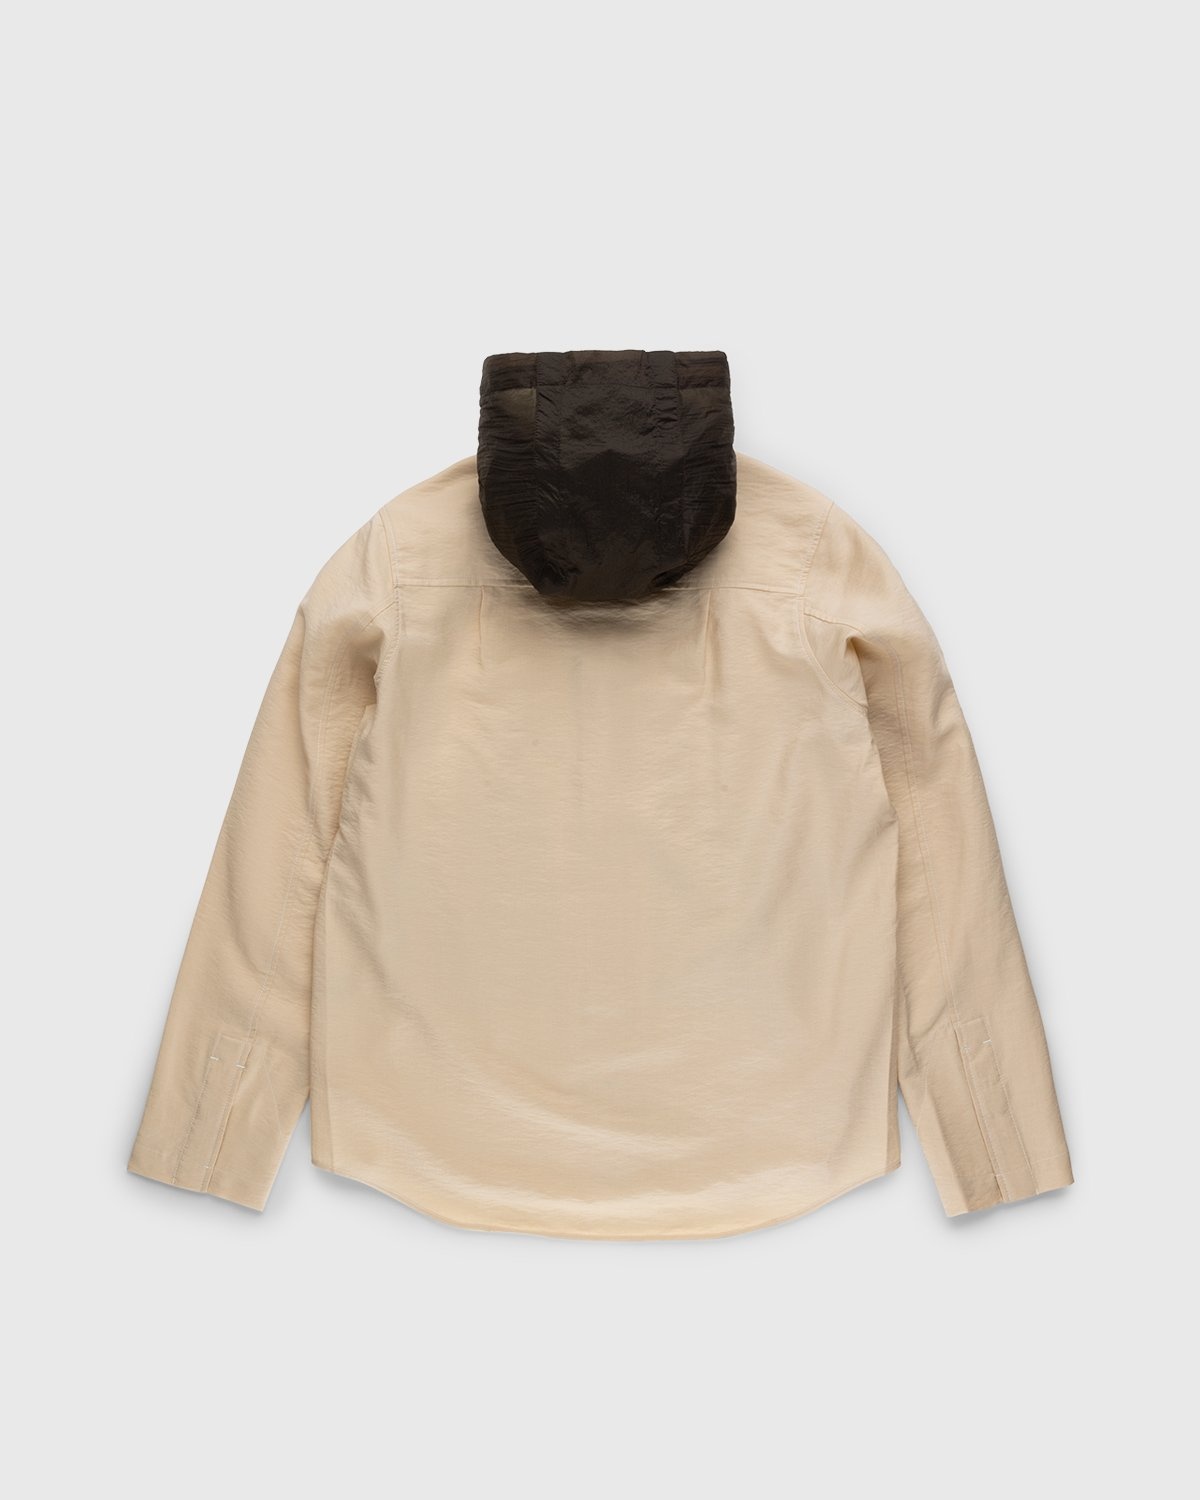 Arnar Mar Jonsson – Solarlag Hooded Shirt Melon/Chocolate - Outerwear - Beige - Image 2